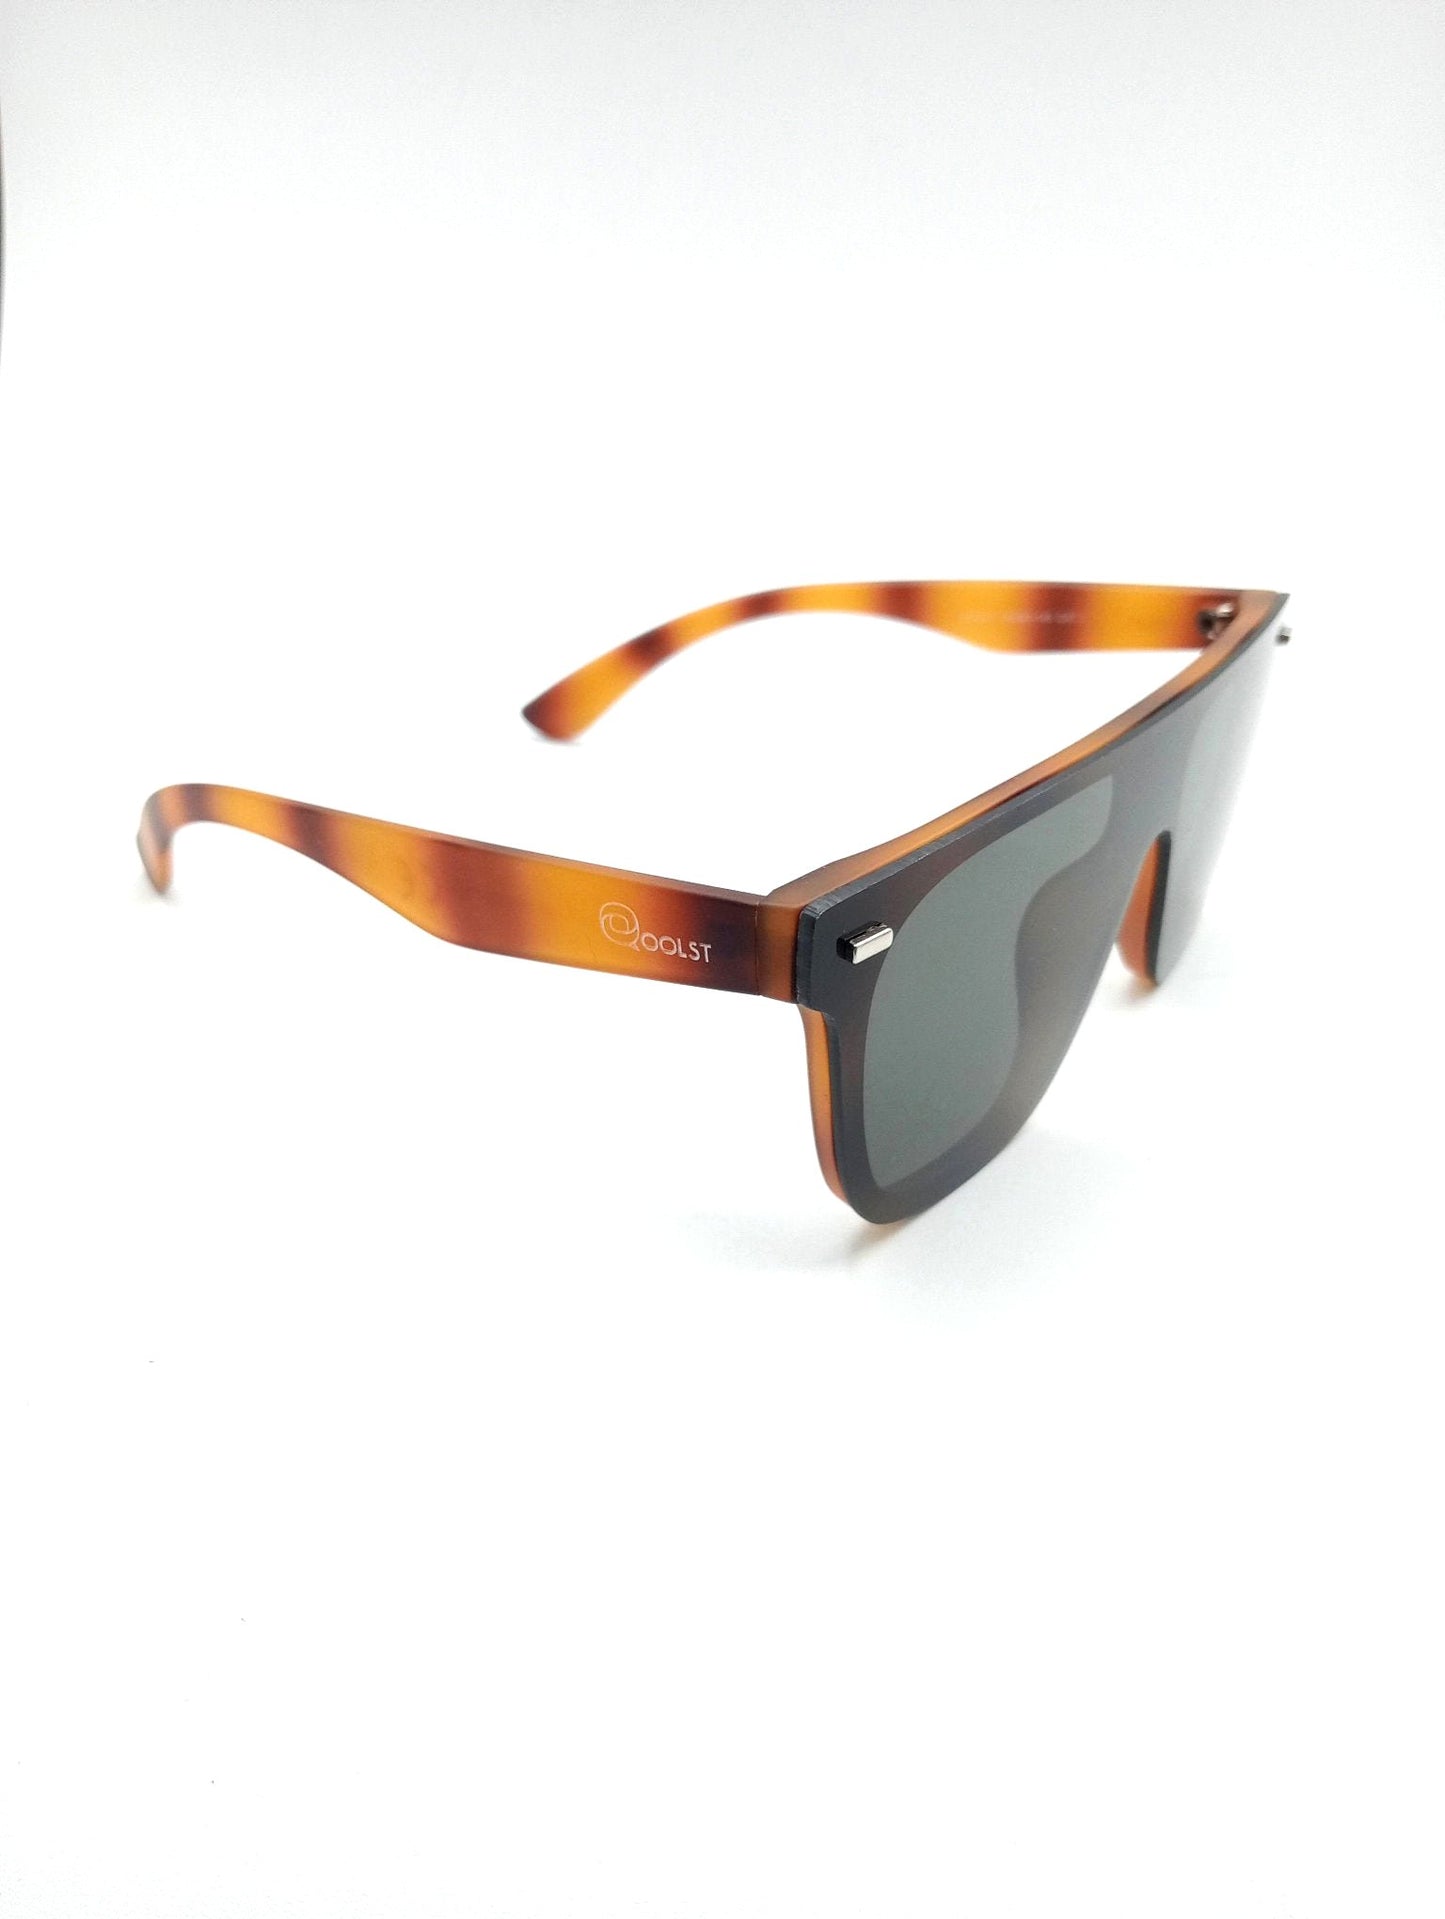 Sunglasses for women and men Qoolst Club